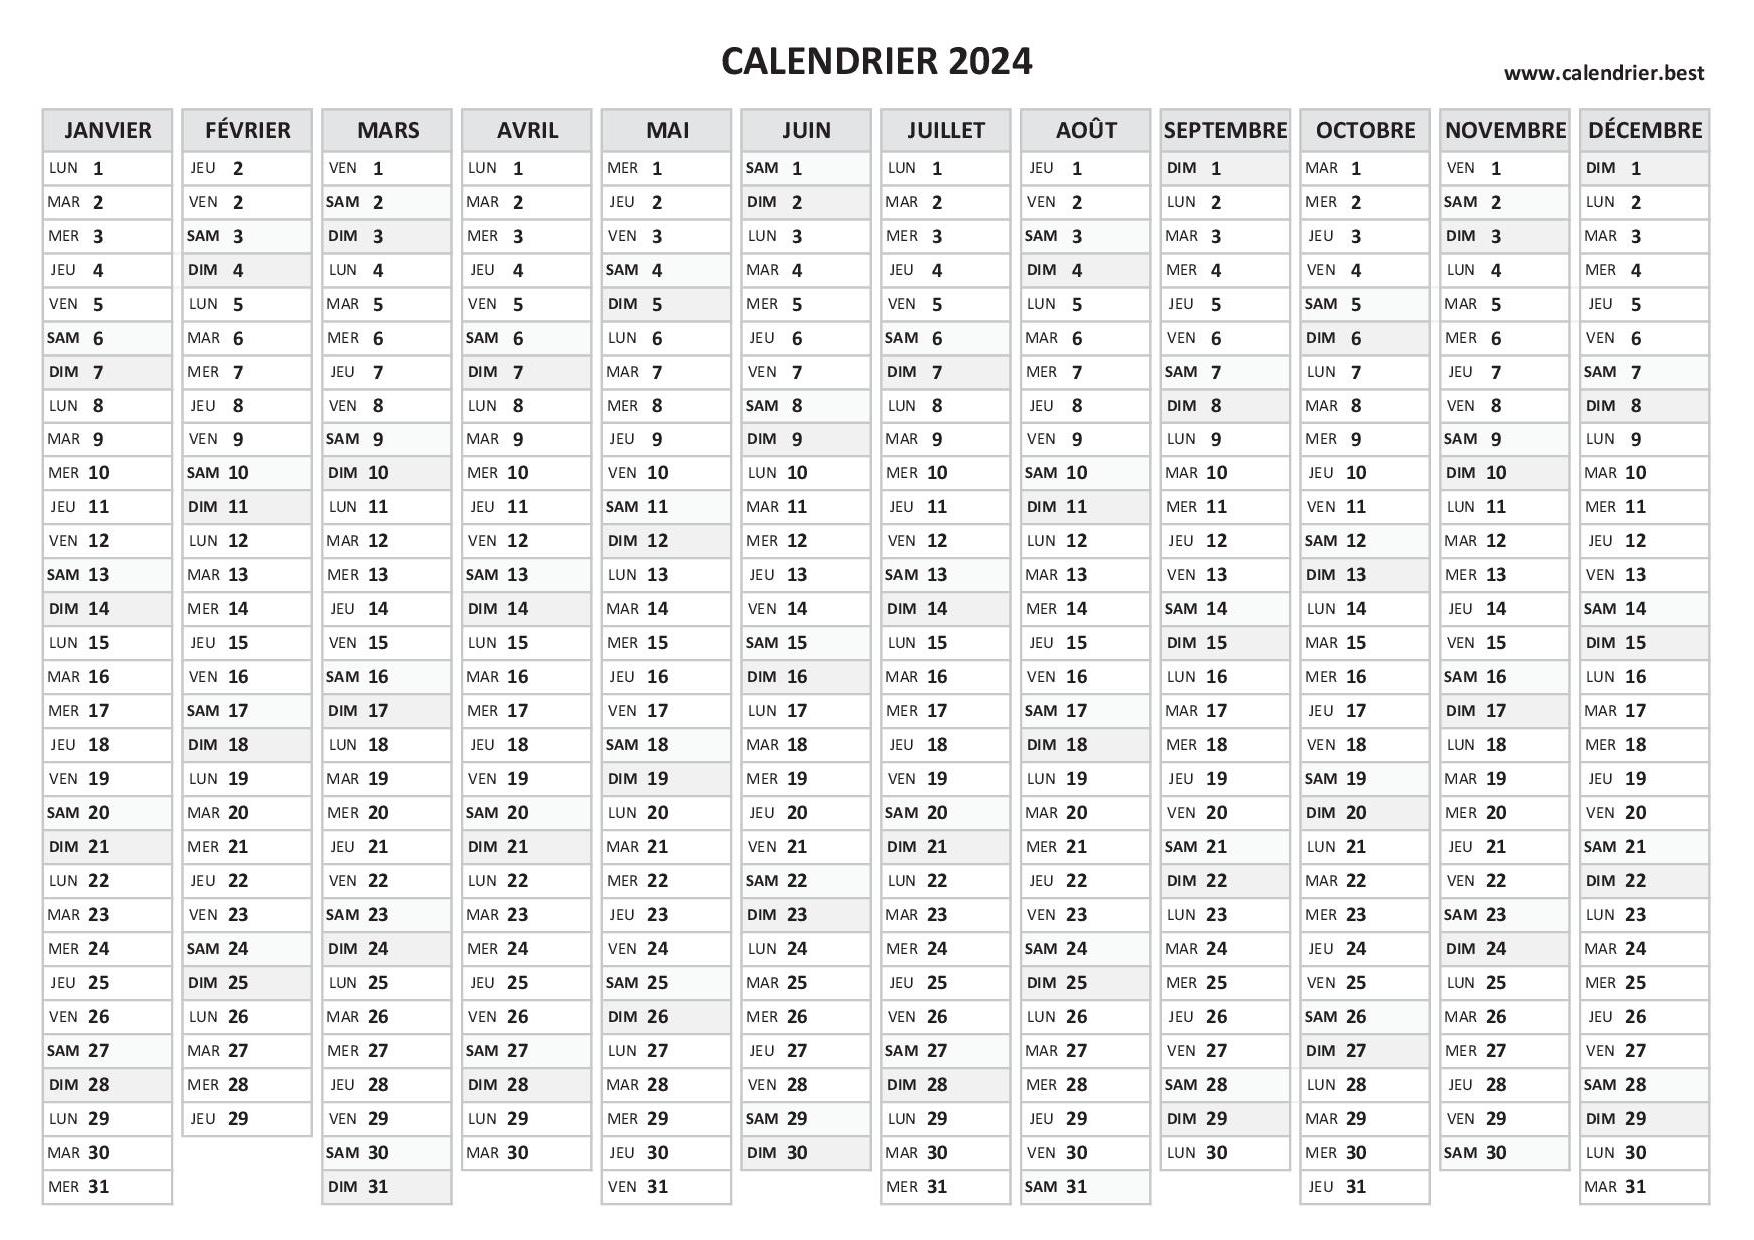 Calendrier 2024 Grand planificateur annuel annuel 12 calendrier